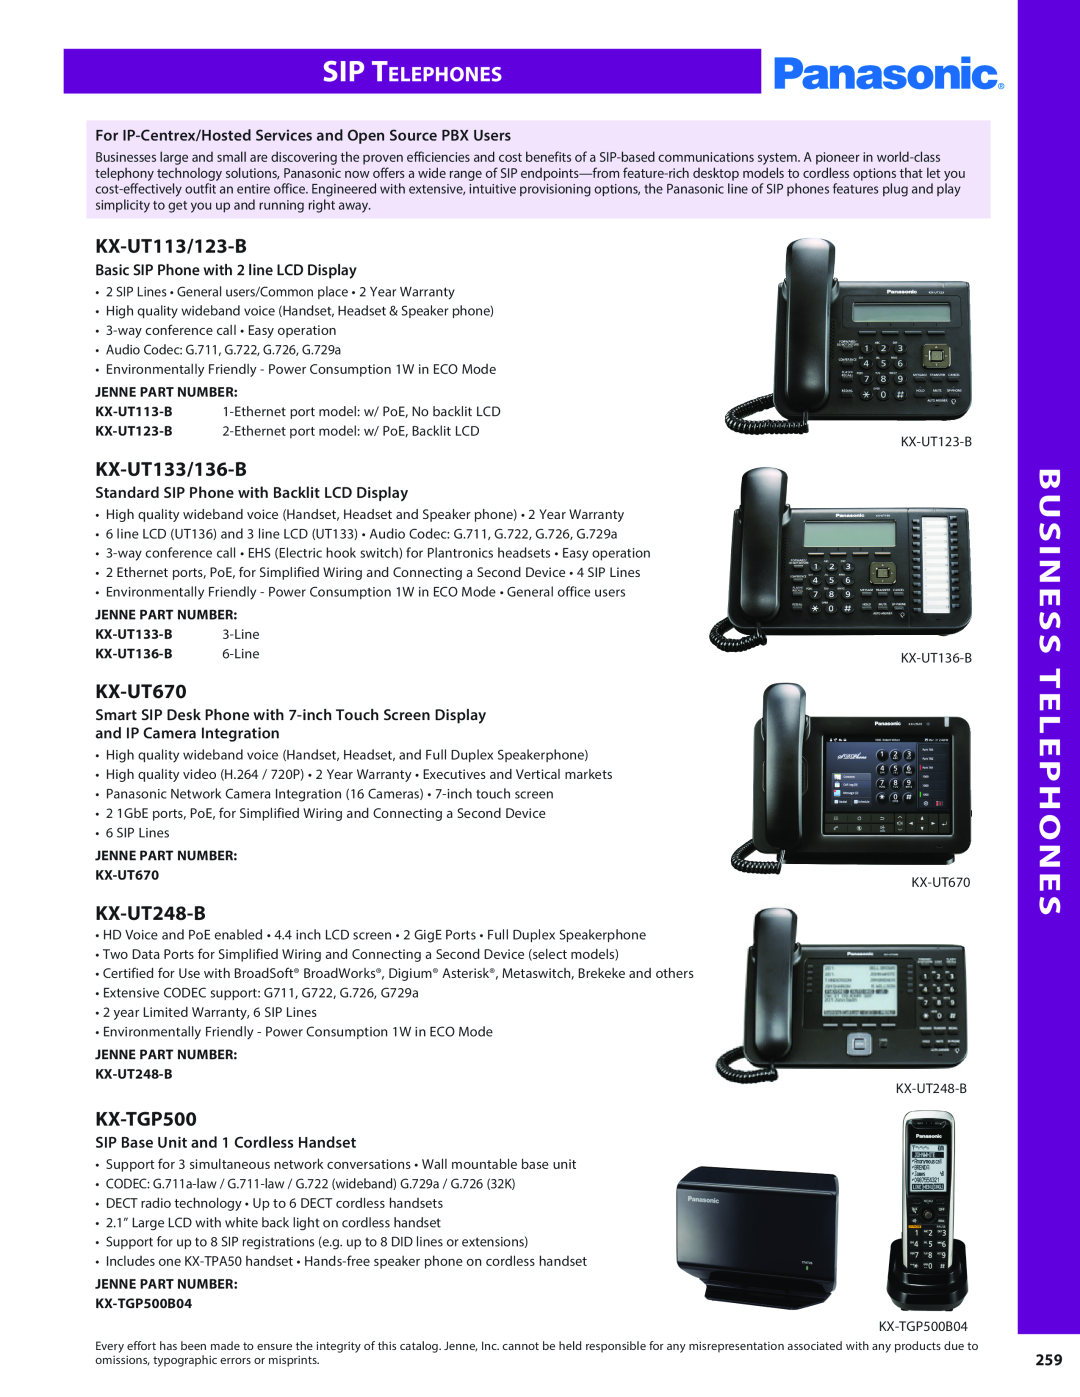 Panasonic PMPU2000 manual Business Telephones, SIP Telephones, Basic SIP Phone with 2 line LCD Display 